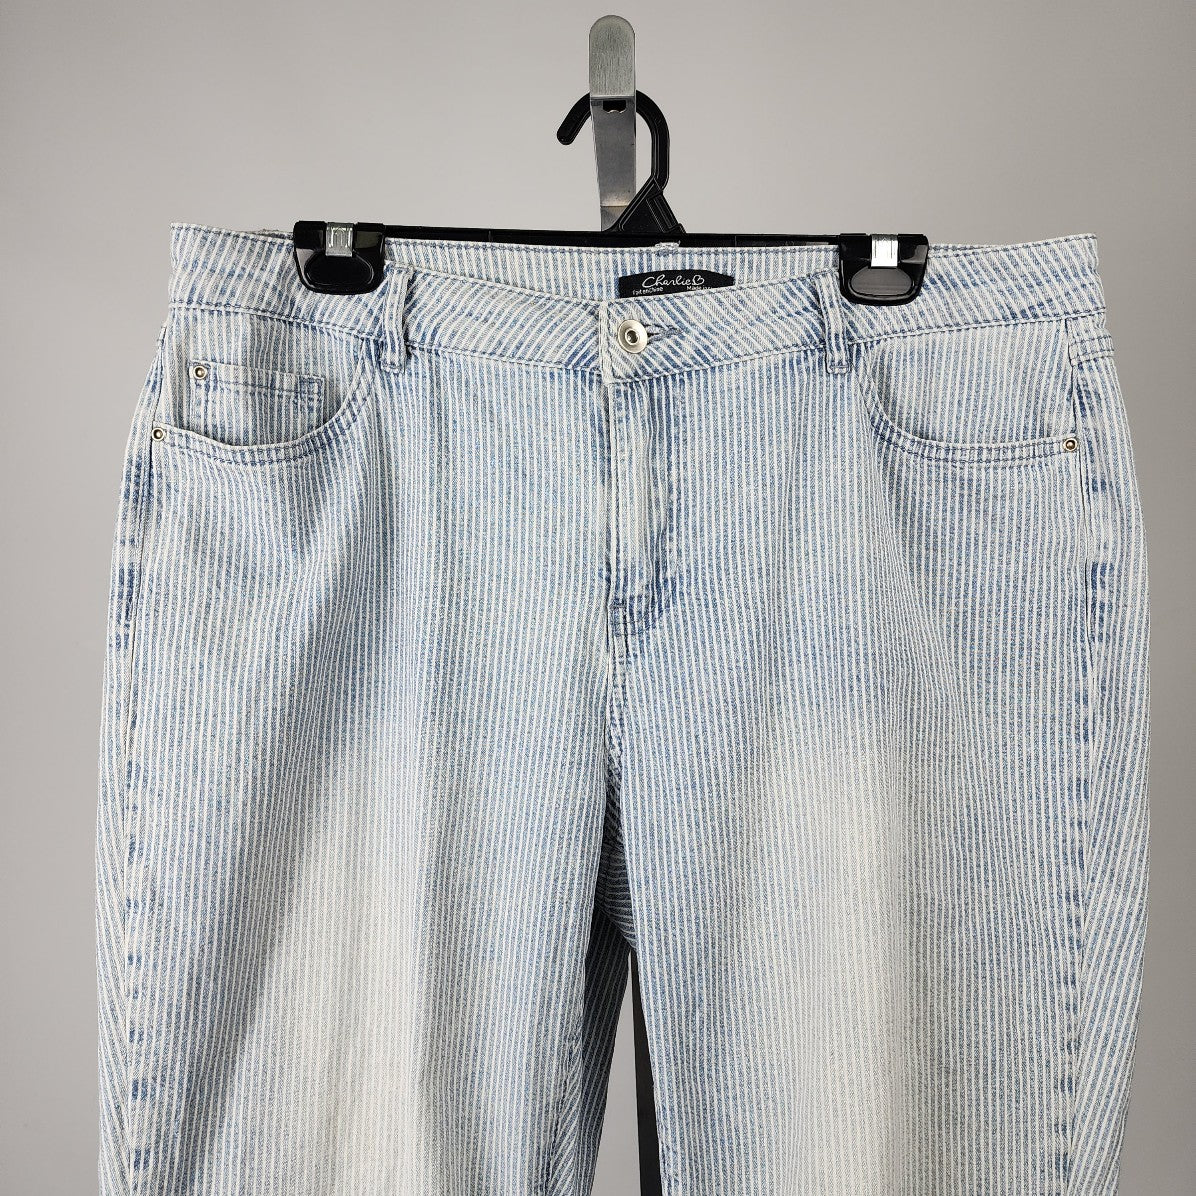 Charlie B Light Wash Striped Slim Leg Cropped Jeans Size 12